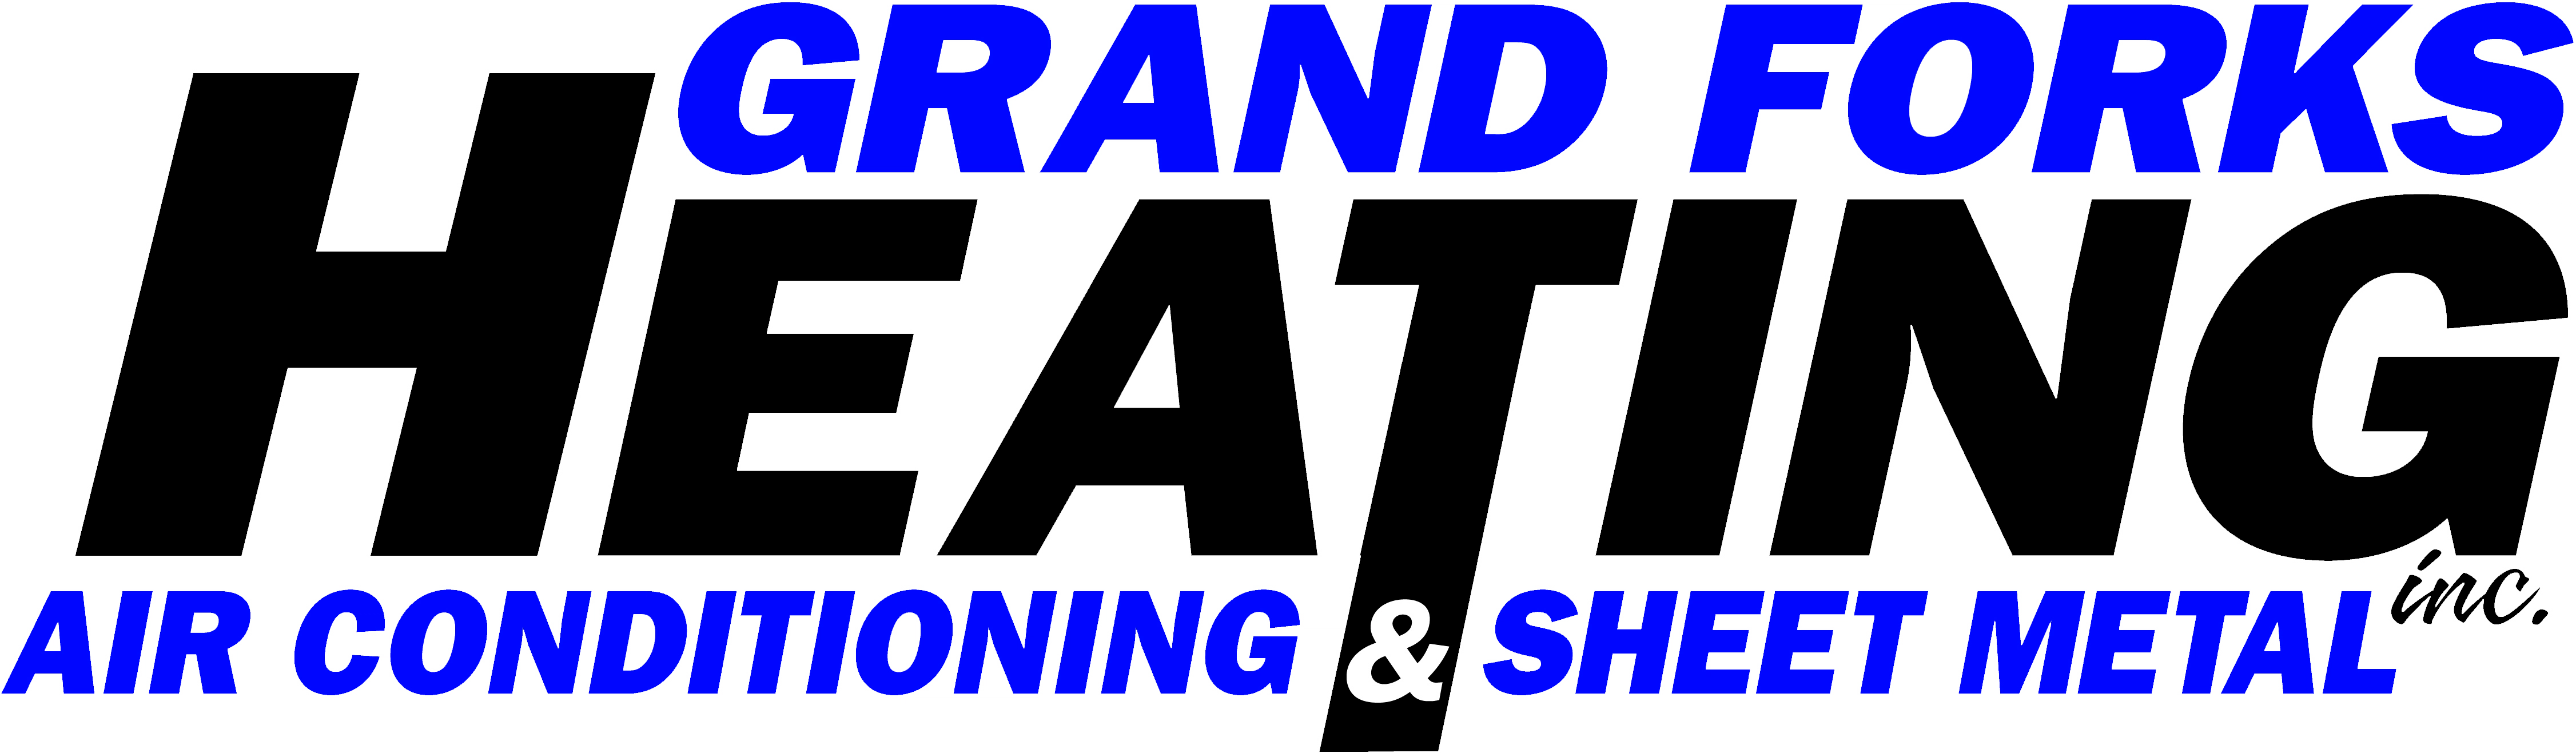 Grand Forks Heating, Air Conditioning, & Sheet Metal Inc. Logo